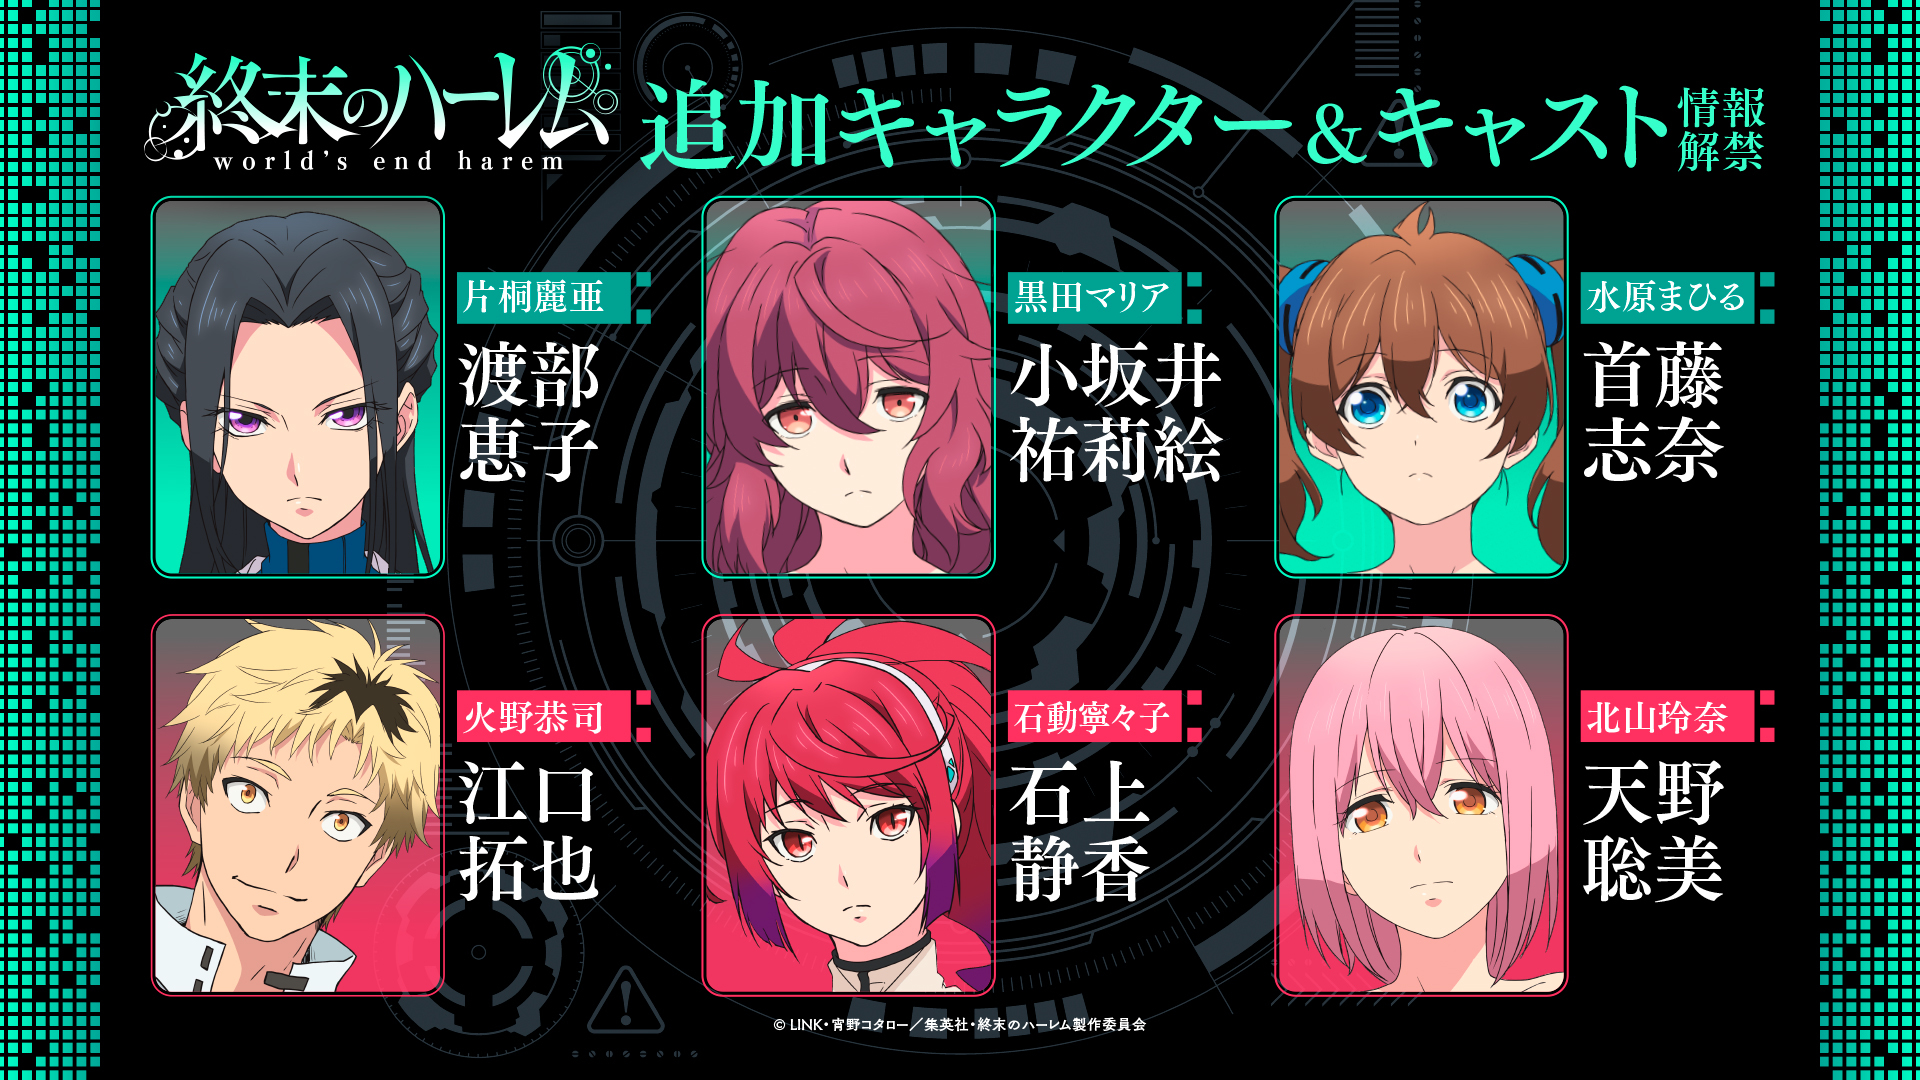 MyAnimeList on X: Shuumatsu no Harem (World's End Harem) announces six  additional cast, including Shizuka Ishigami (Nande Koko ni Sensei ga!?) and  Takuya Eguchi (Oregairu); sci-fi harem anime by Studio Gokumi and